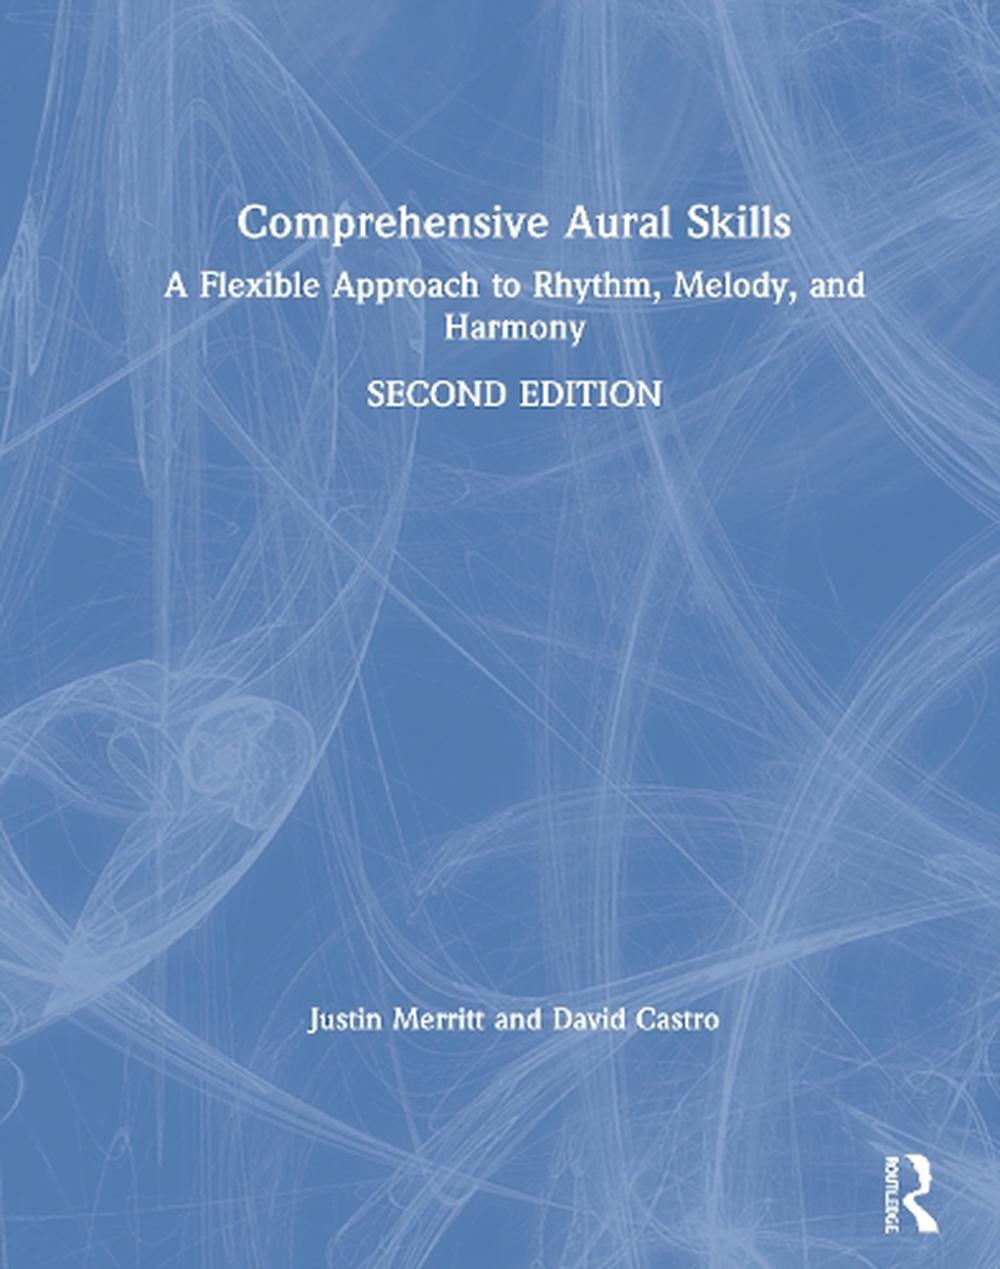 aural skills definition